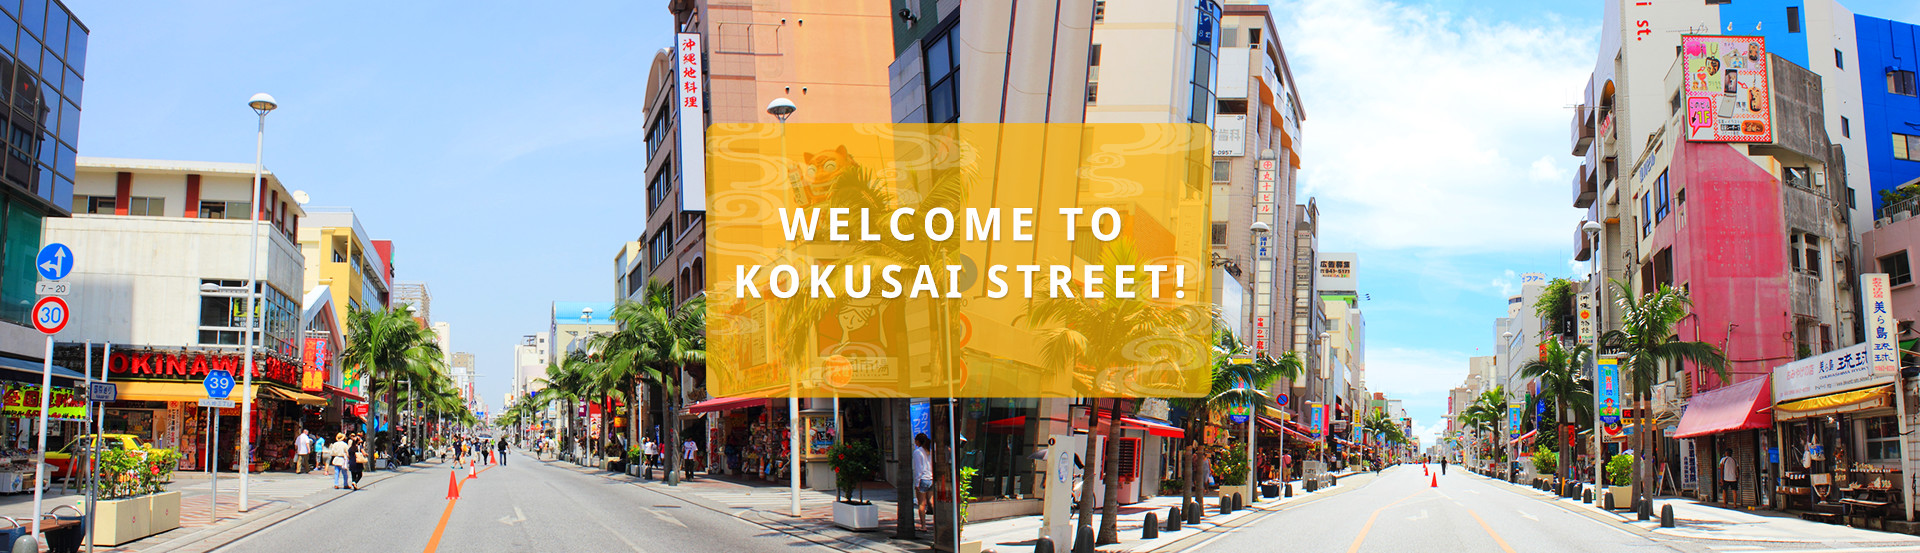 Welcome to Kokusai street!